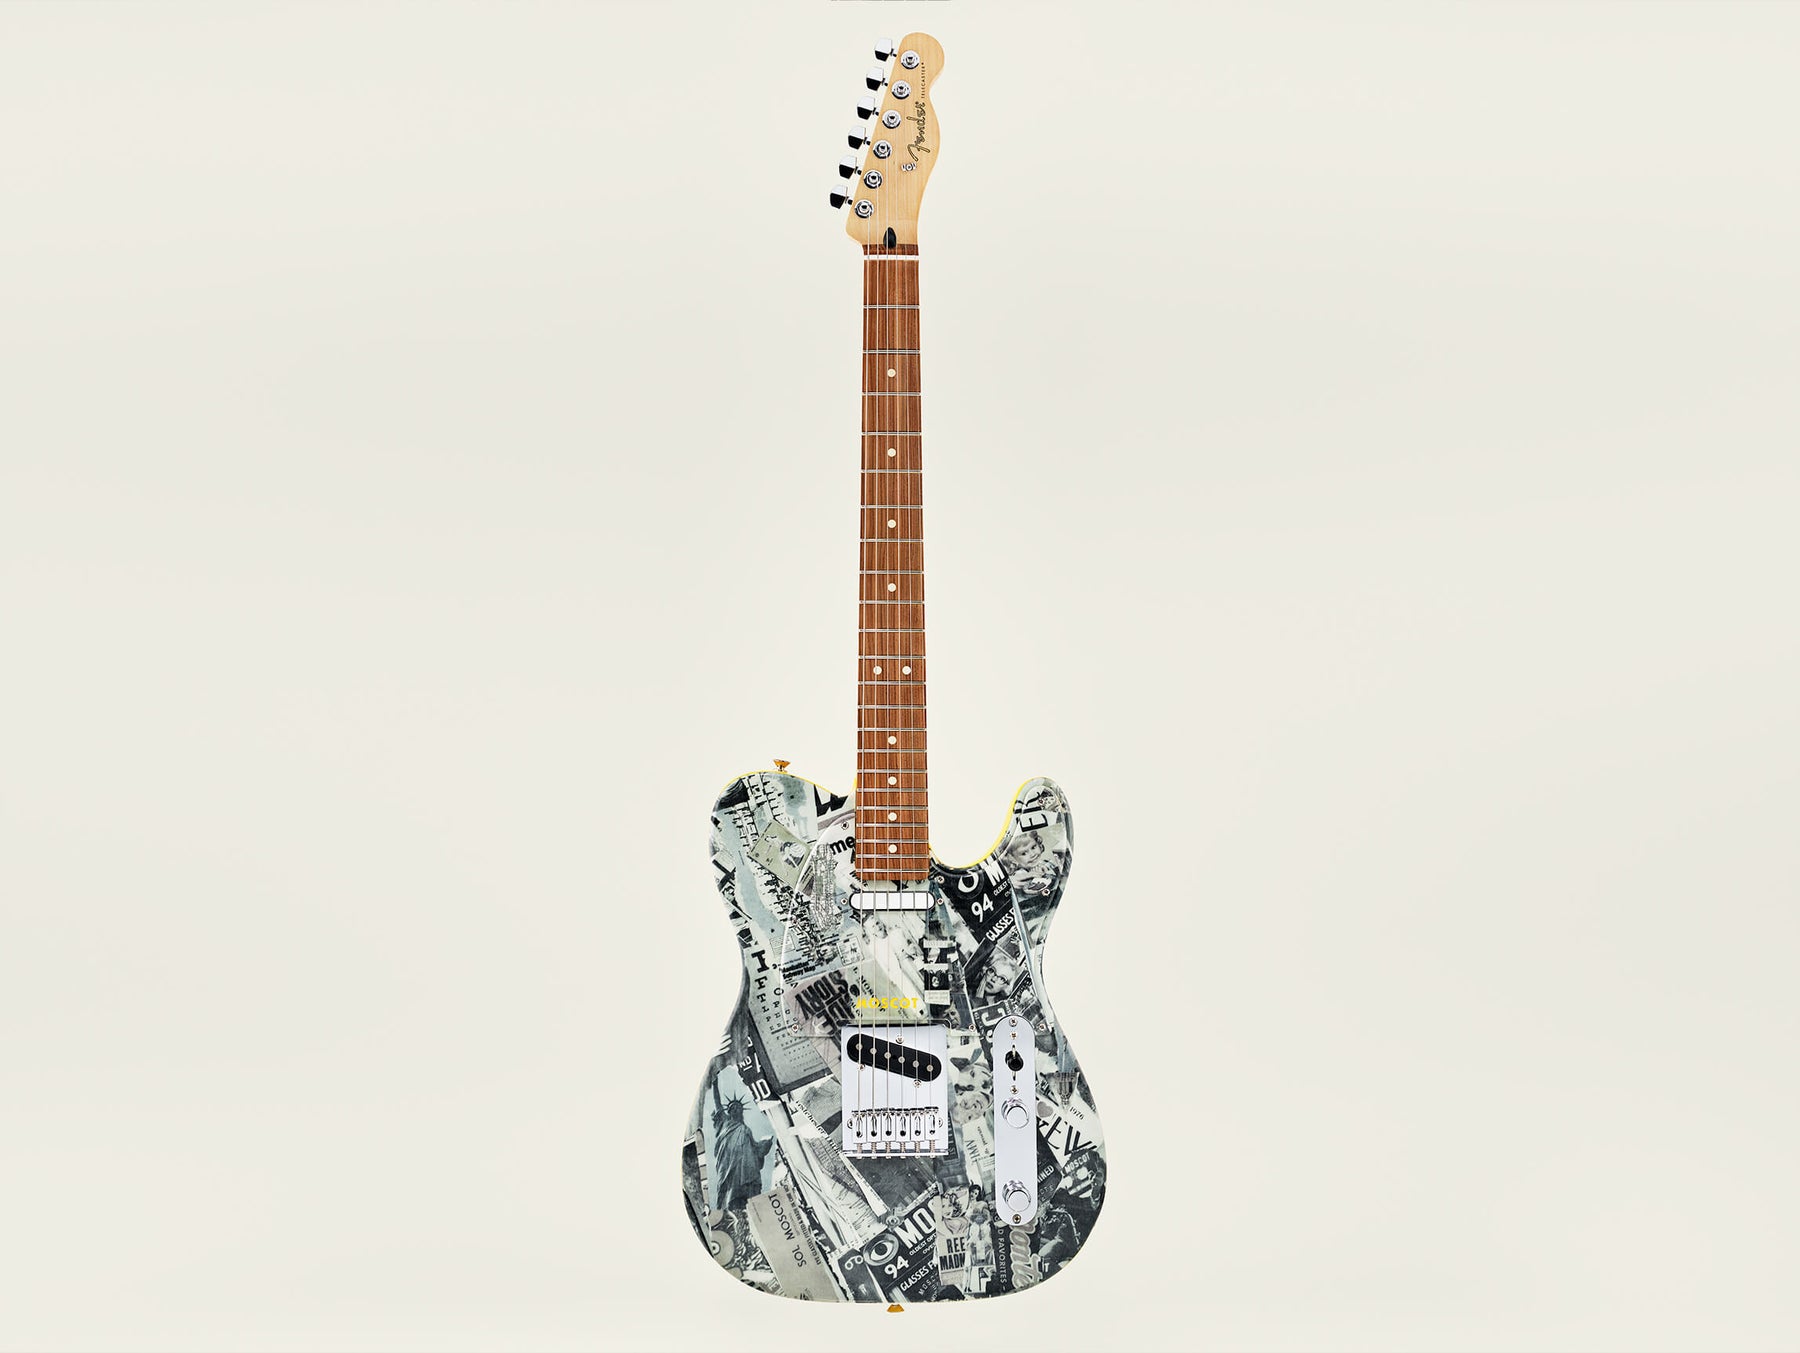 The MOSCOT Fender Guitar